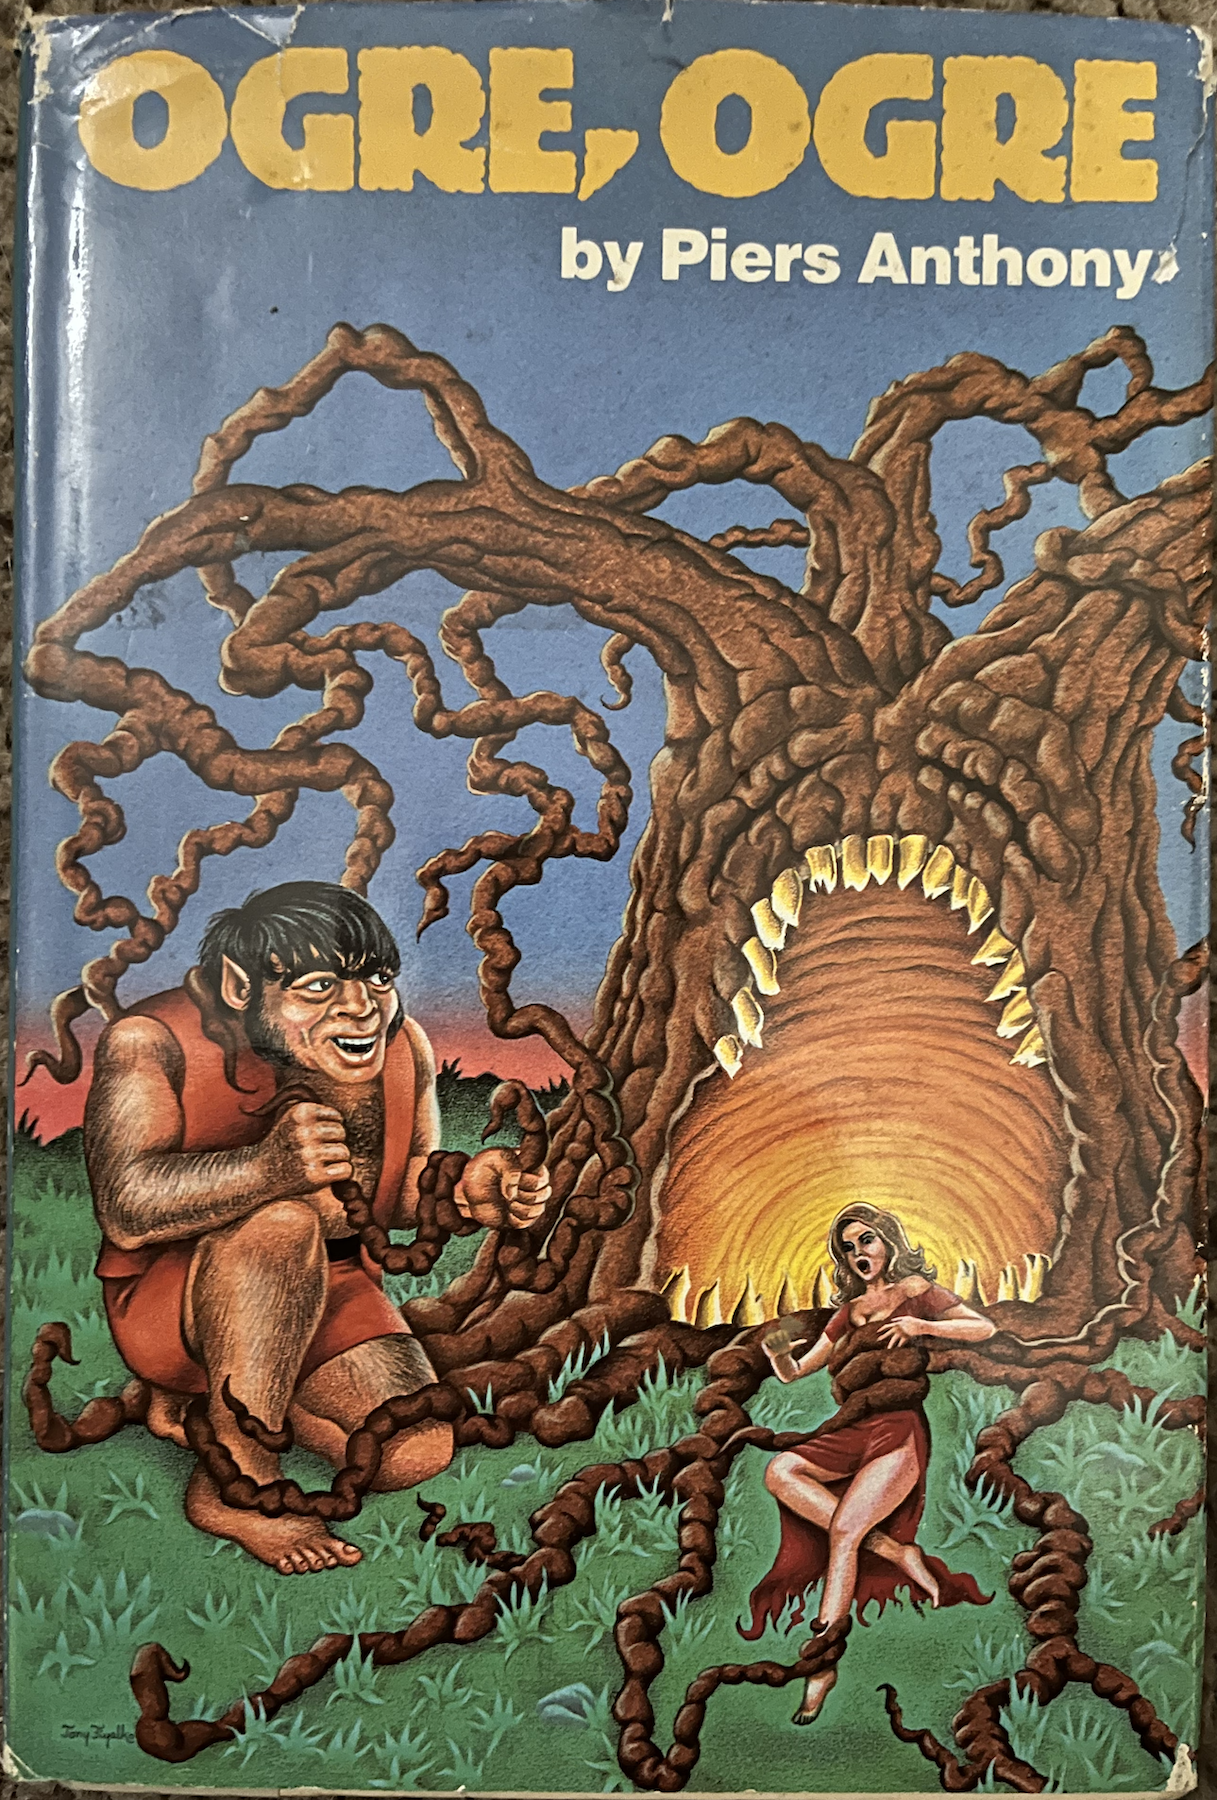 Ogre, Ogre hardback cover